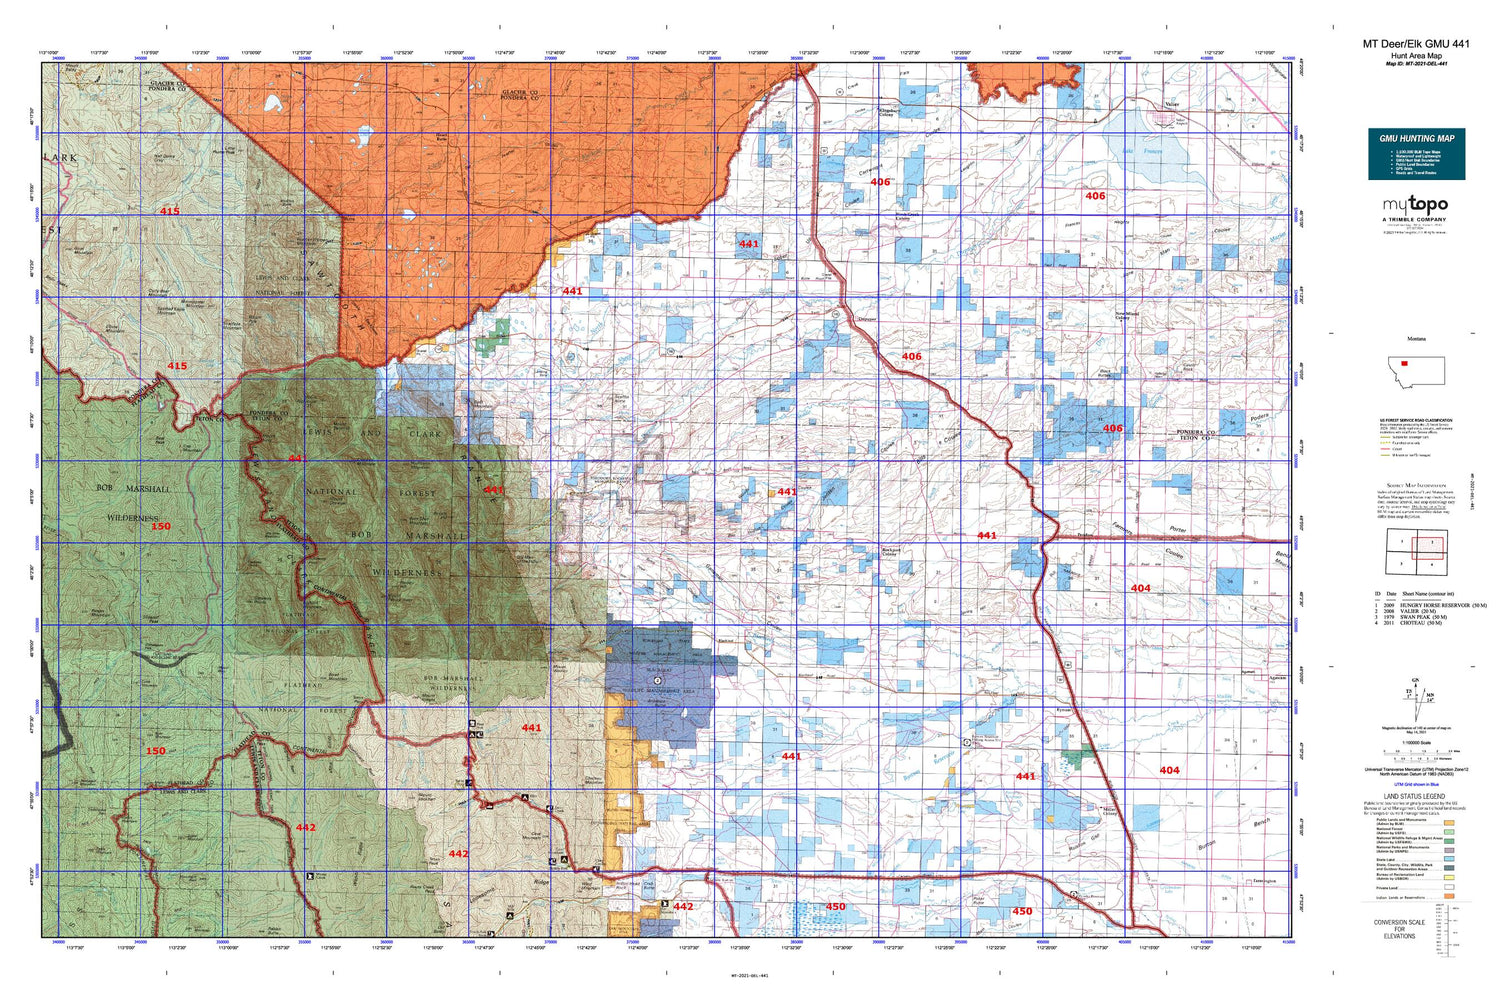 Montana Deer/Elk GMU 441 Map Image